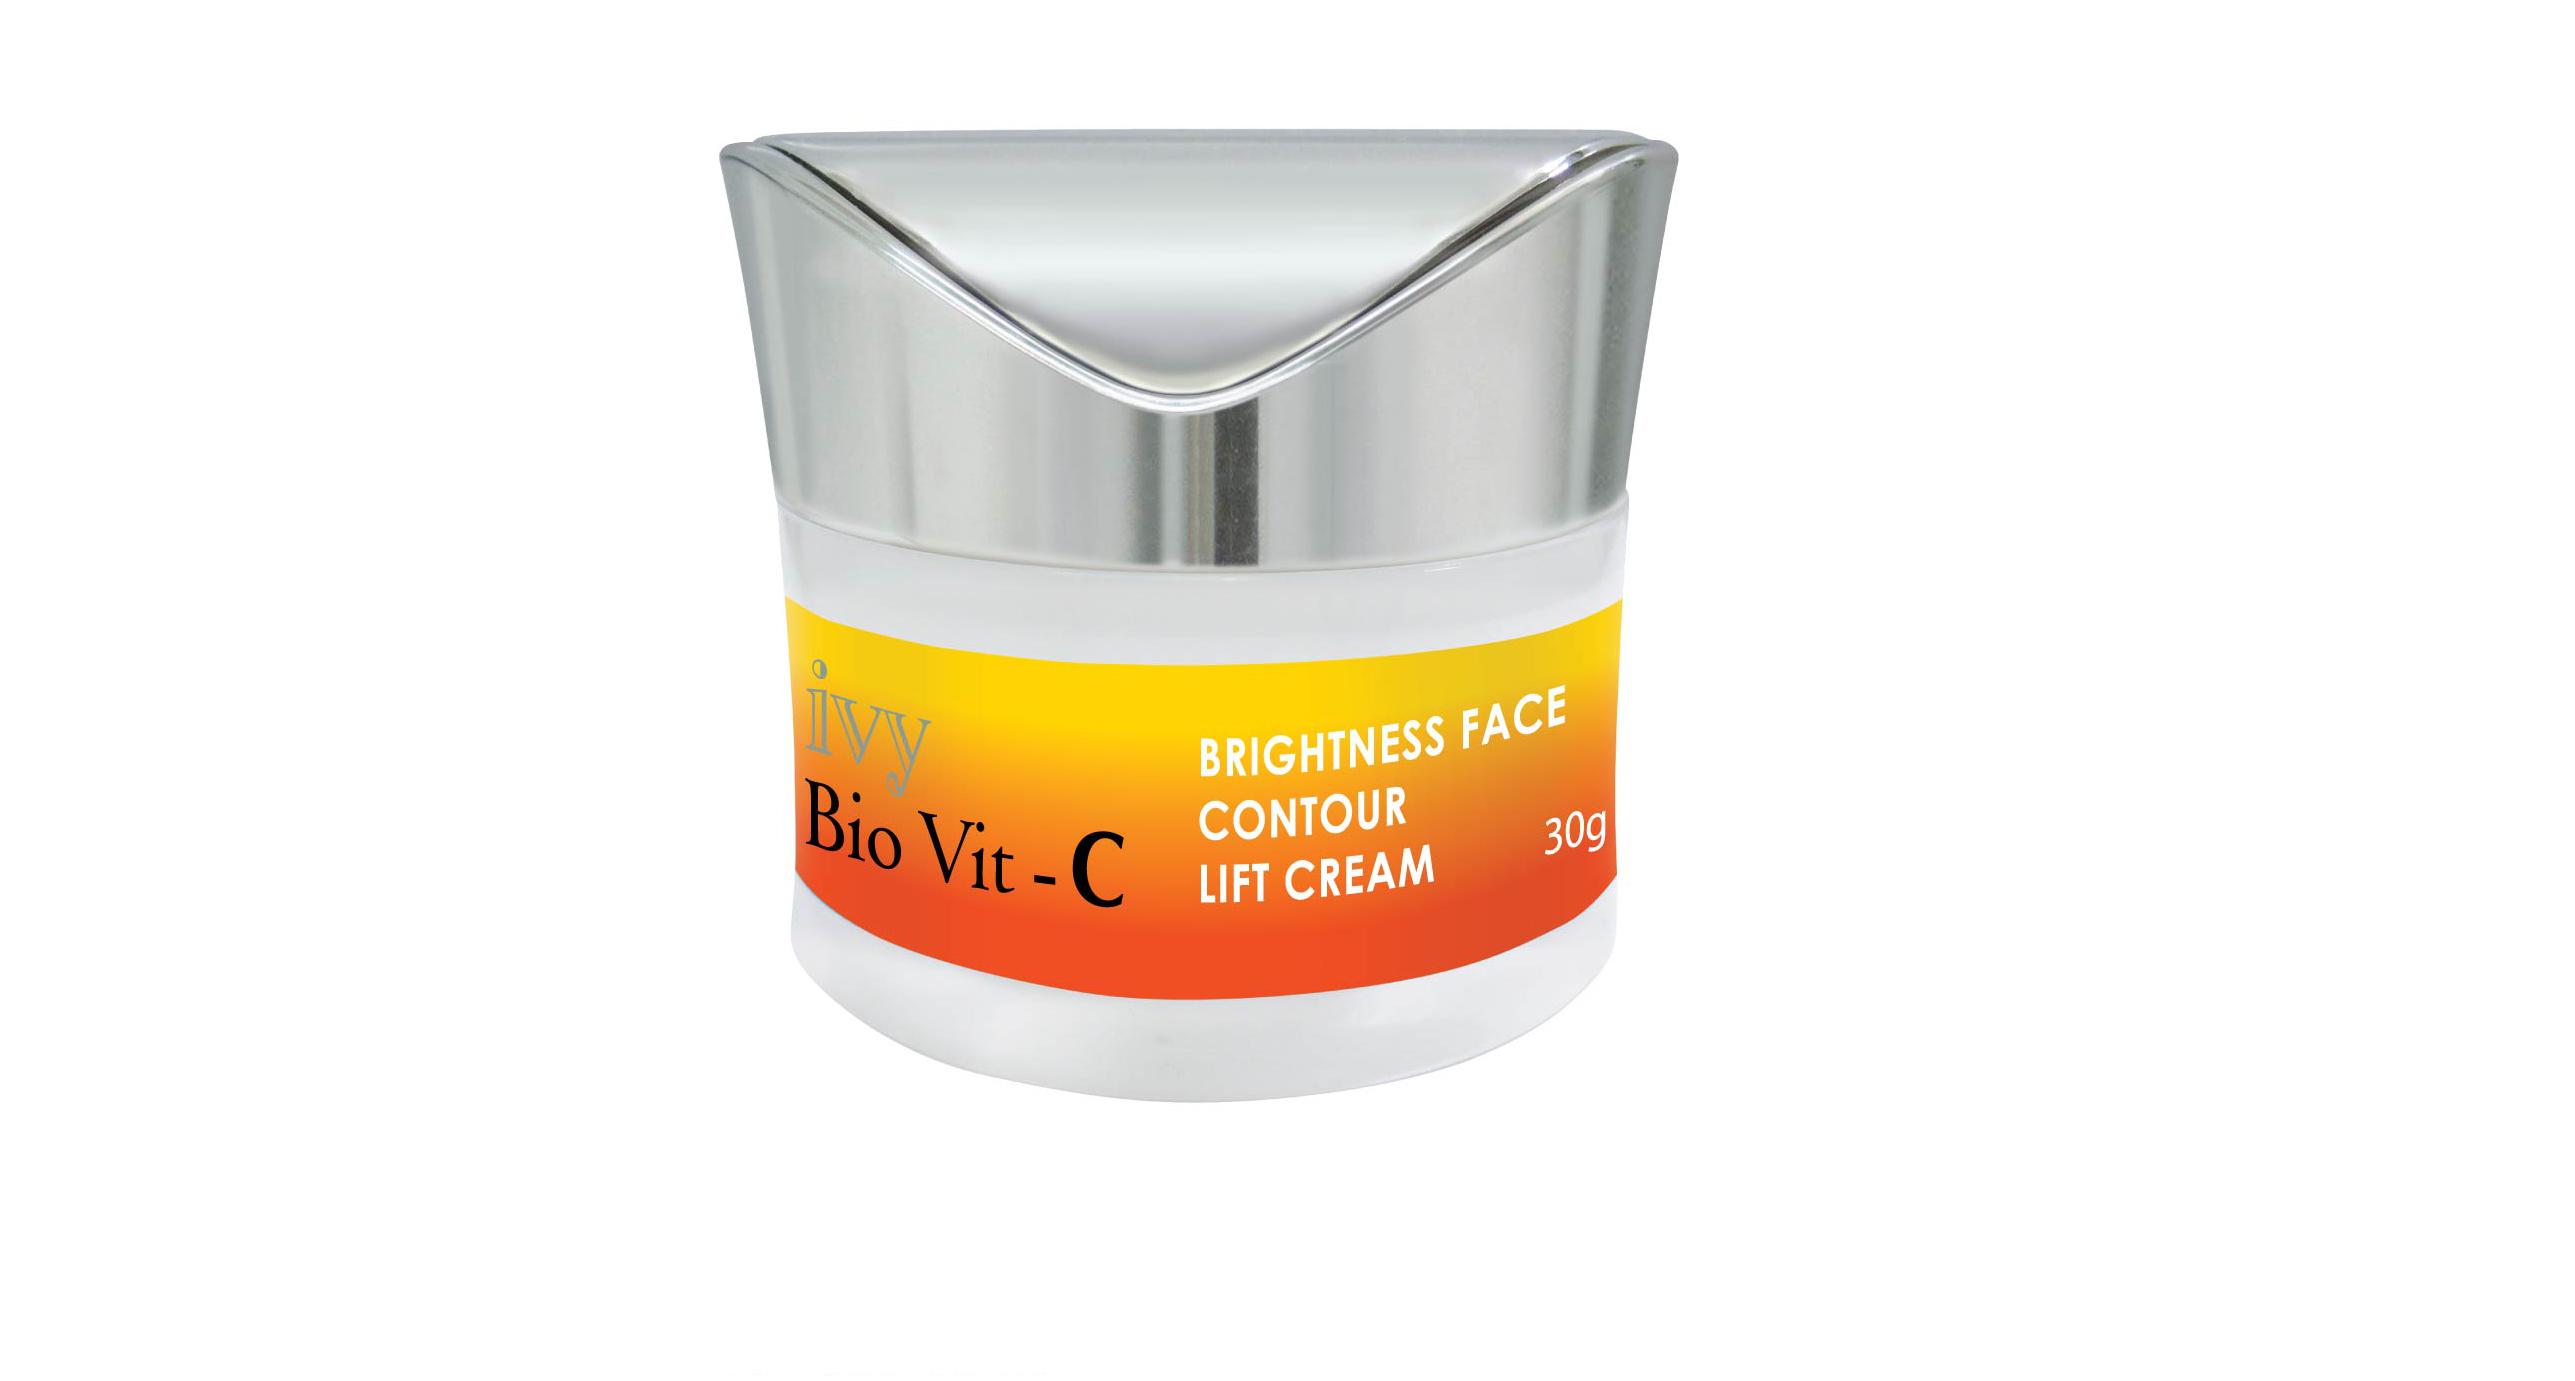 Ivy Bio Vit-C Brightness Face Contour Lift Cream (30gm)